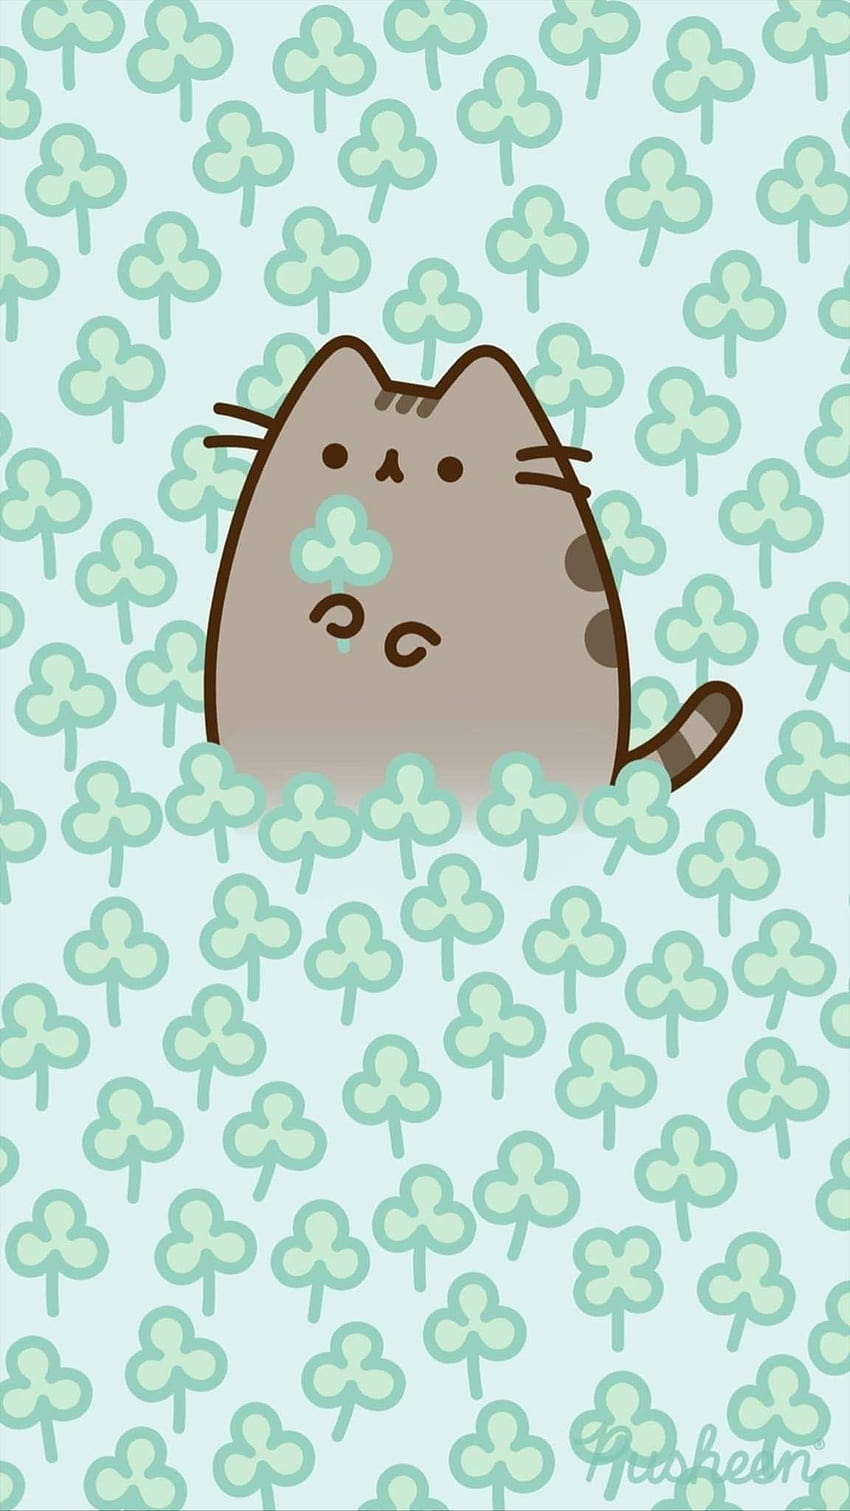 Rojana S di Pusheen, kucing pusheen musim semi wallpaper ponsel HD